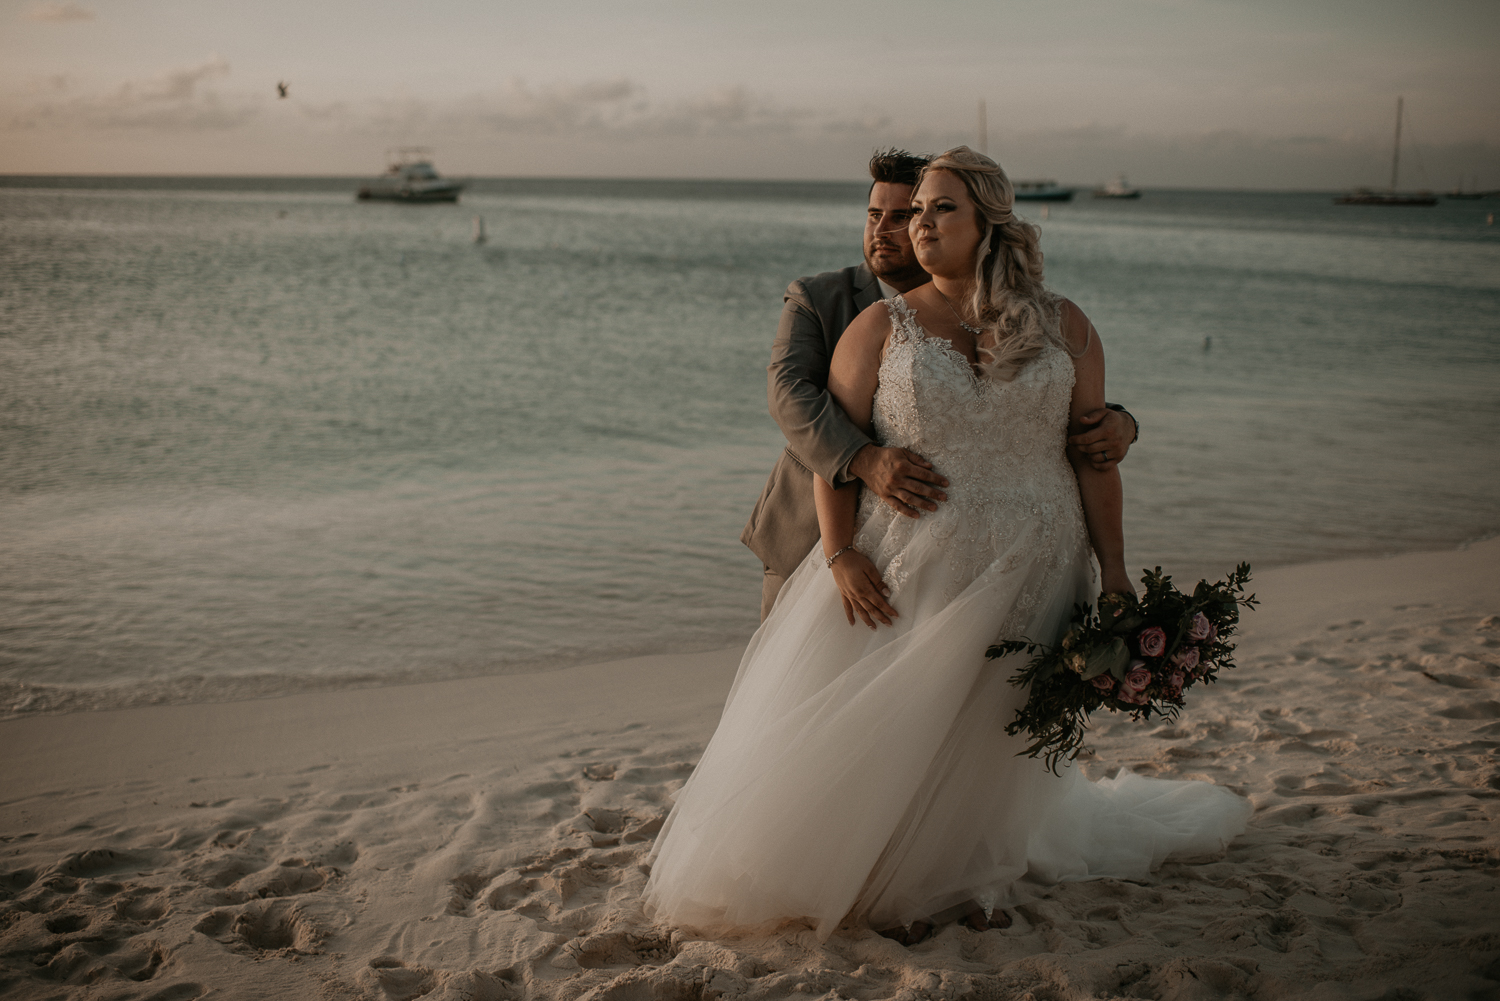 A Destination Aruba Elopement Wedding at Riu Palace